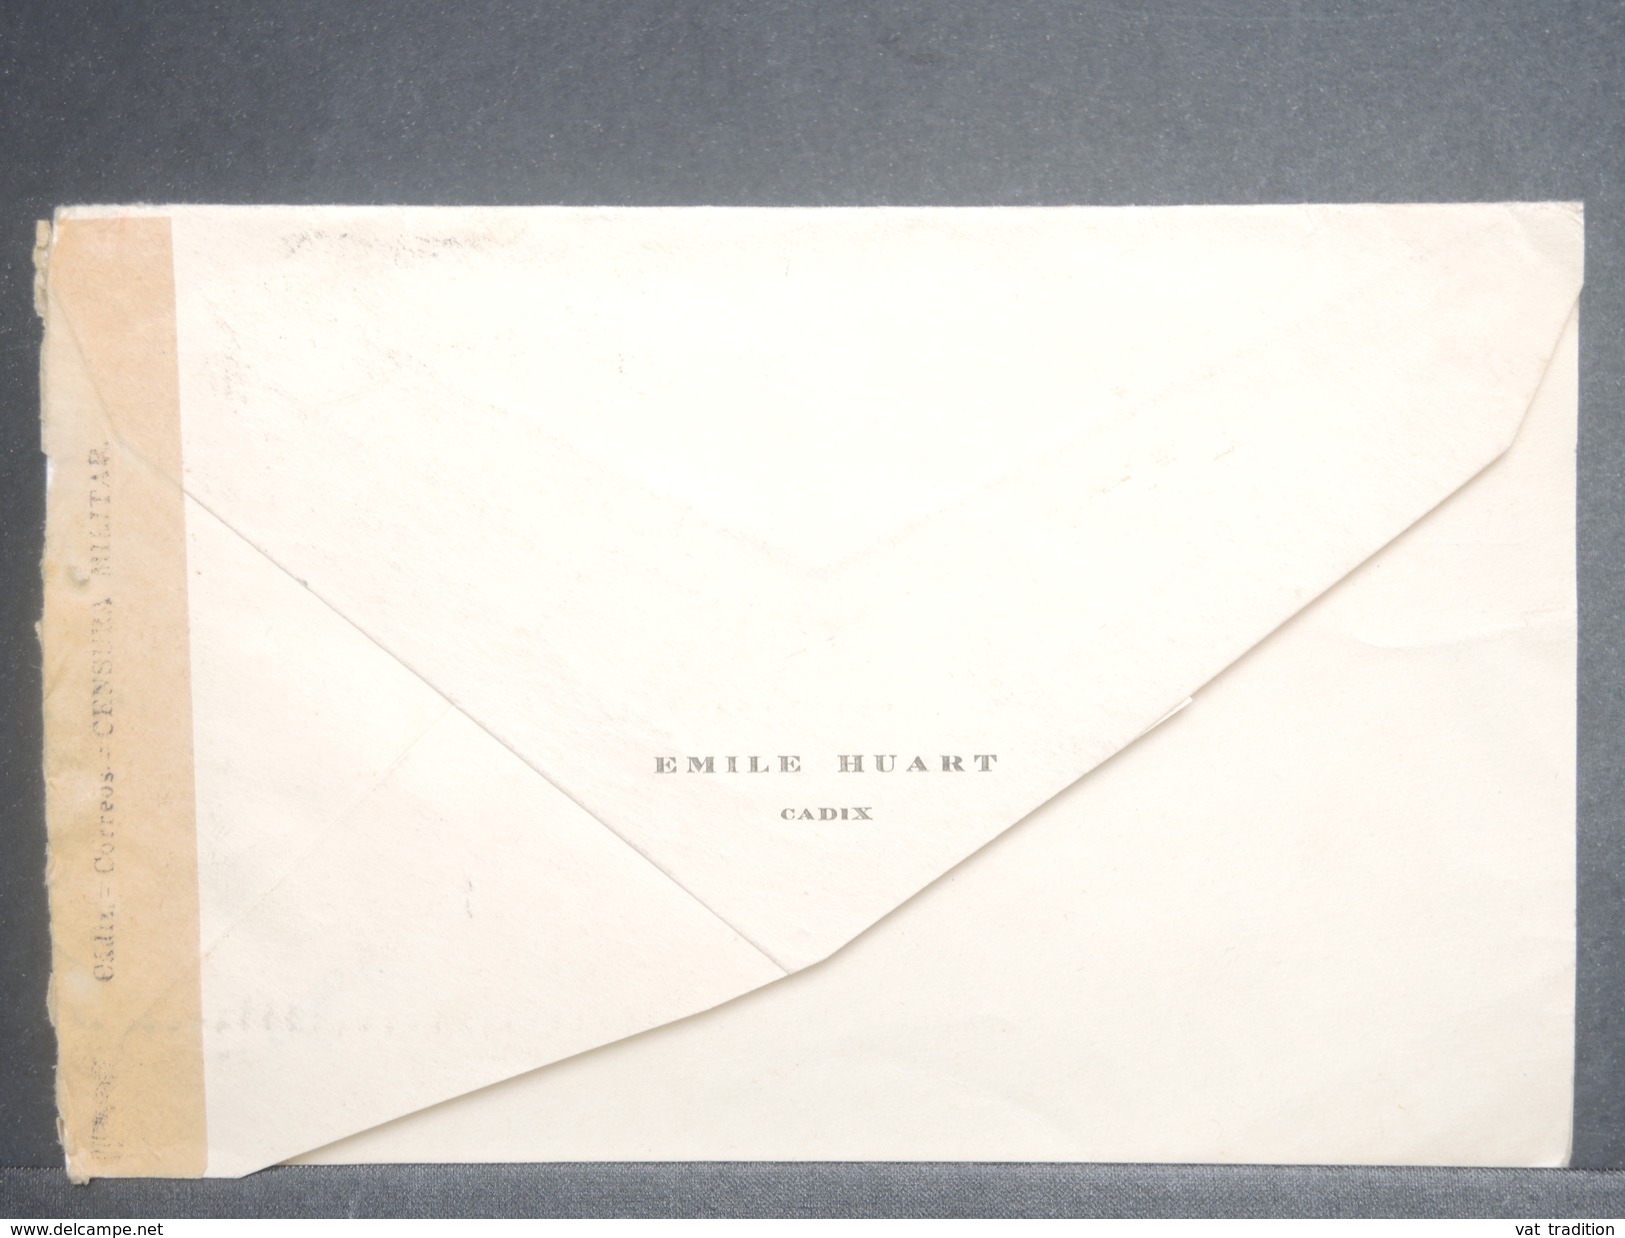 ESPAGNE - Enveloppe De Cadix Pour La France En 1936 , Censure De Cadix  - L 7035 - Marcas De Censura Republicana